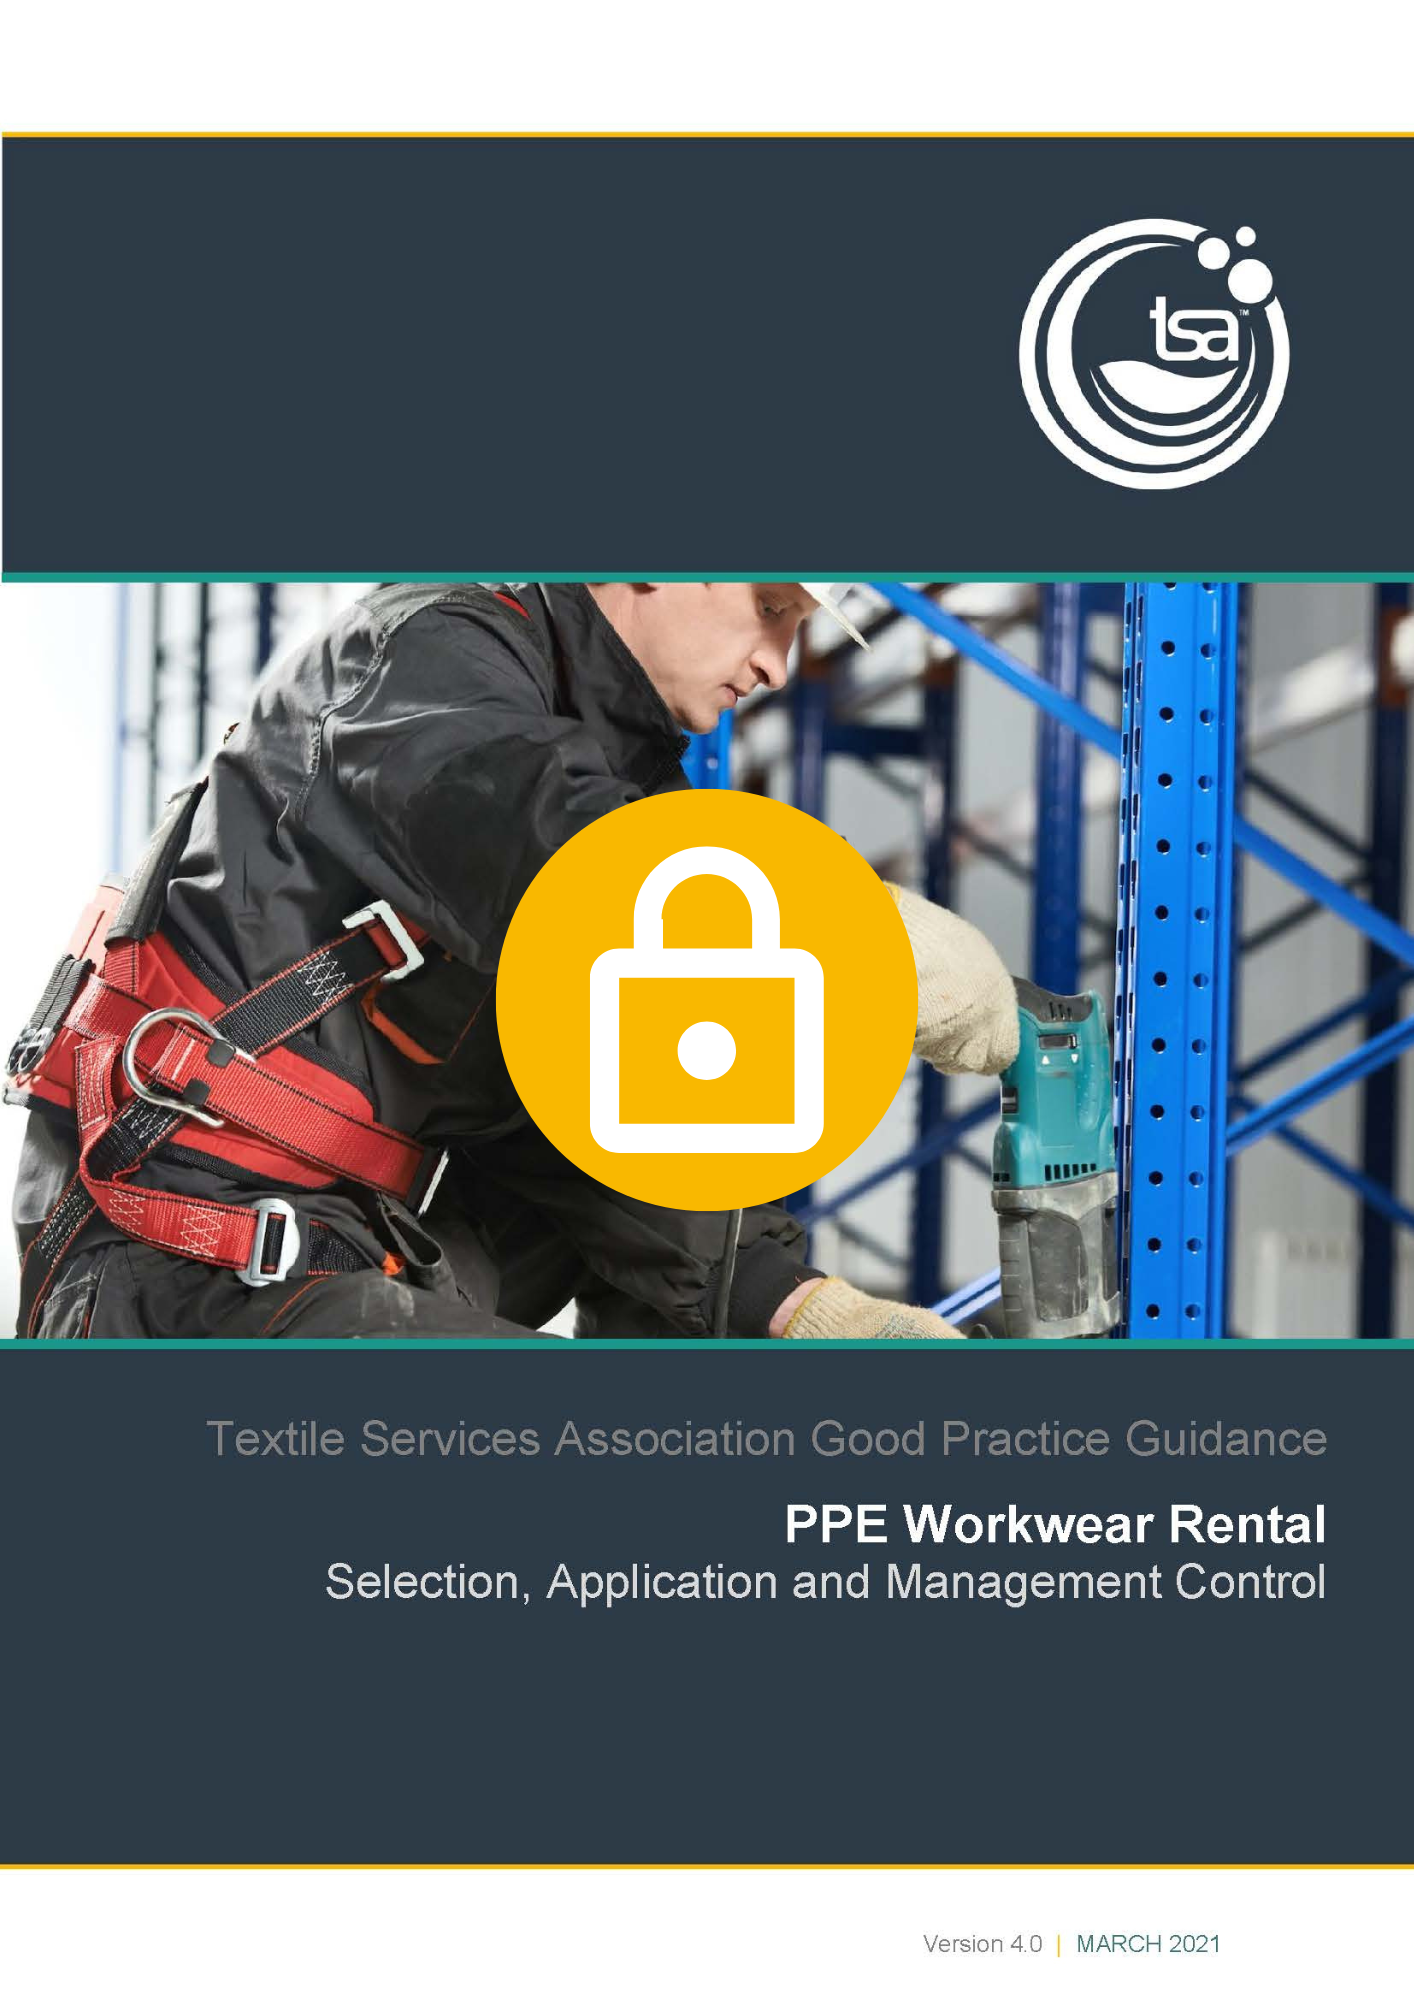 PPE Workwear Rental Good Practice Guidance